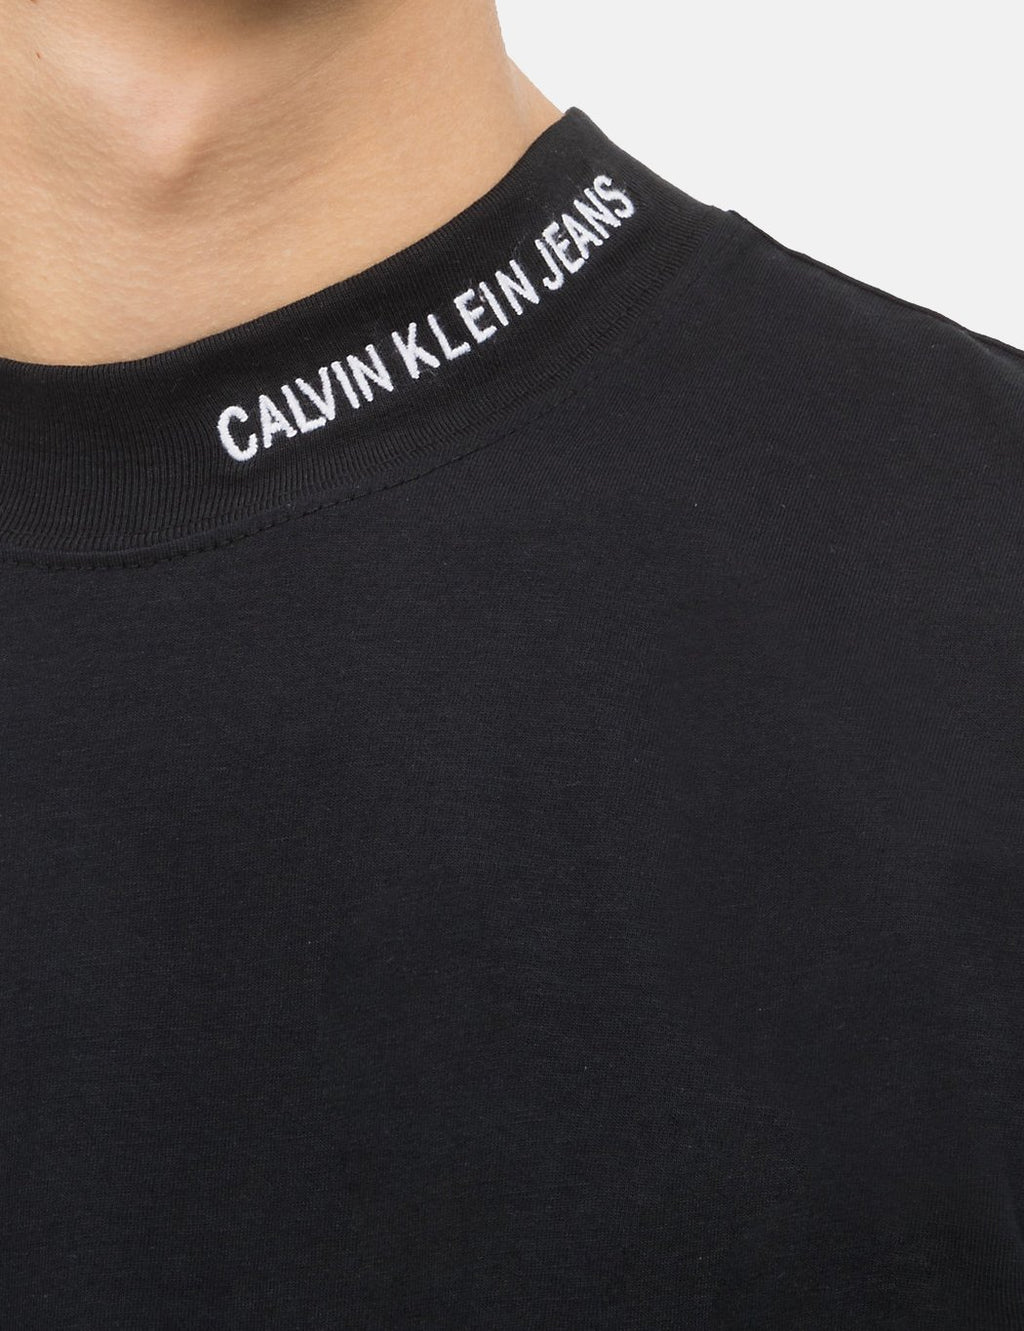 – URBAN EXCESS USA T-Shirt Klein Black Crew EXCESS. - Calvin Embroidered Neck | URBAN